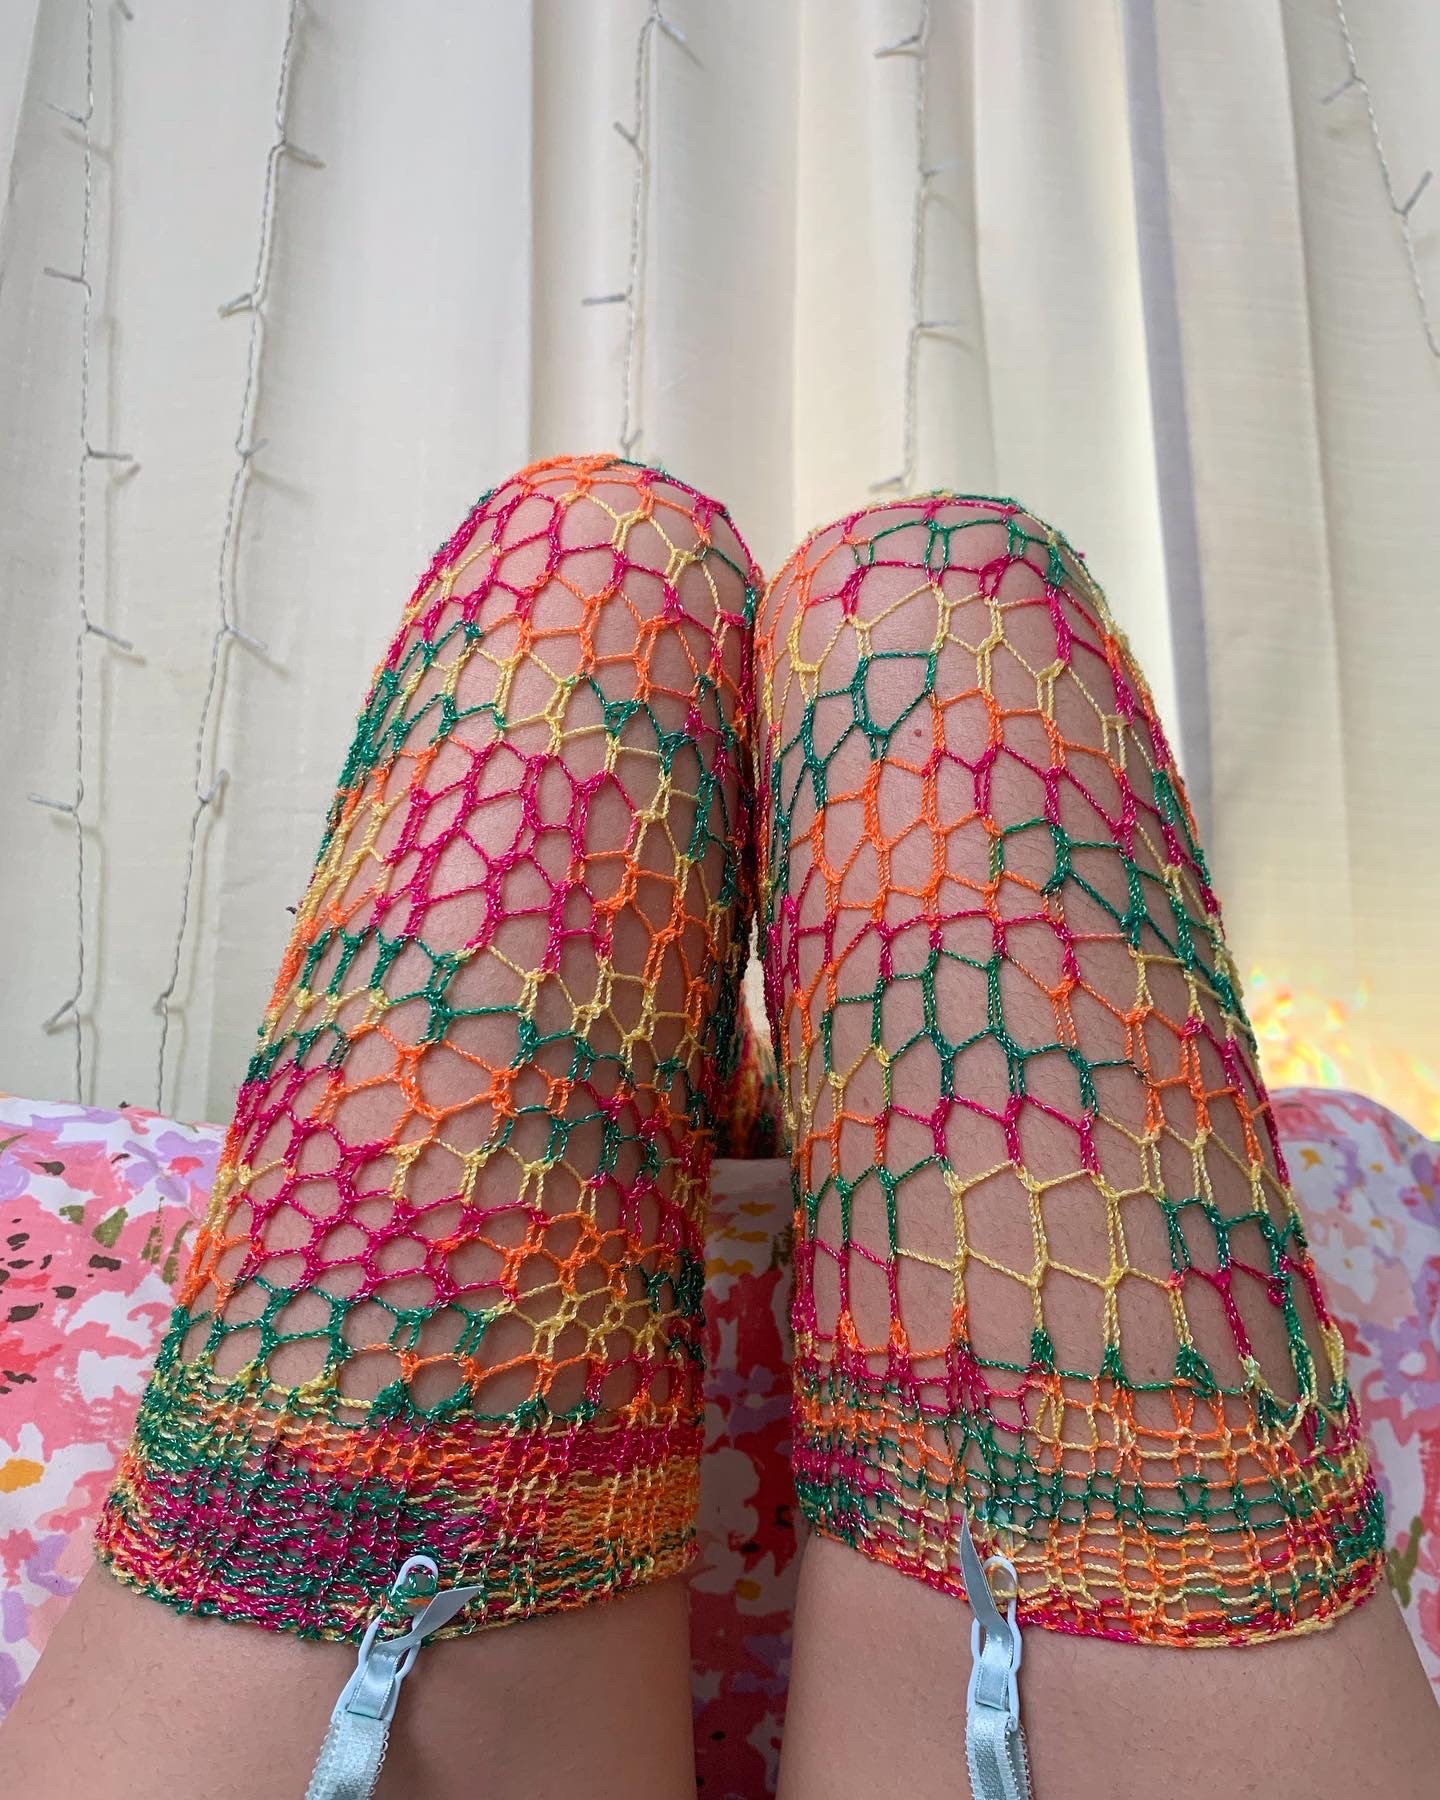 Handknit rainbow fishnet stockings